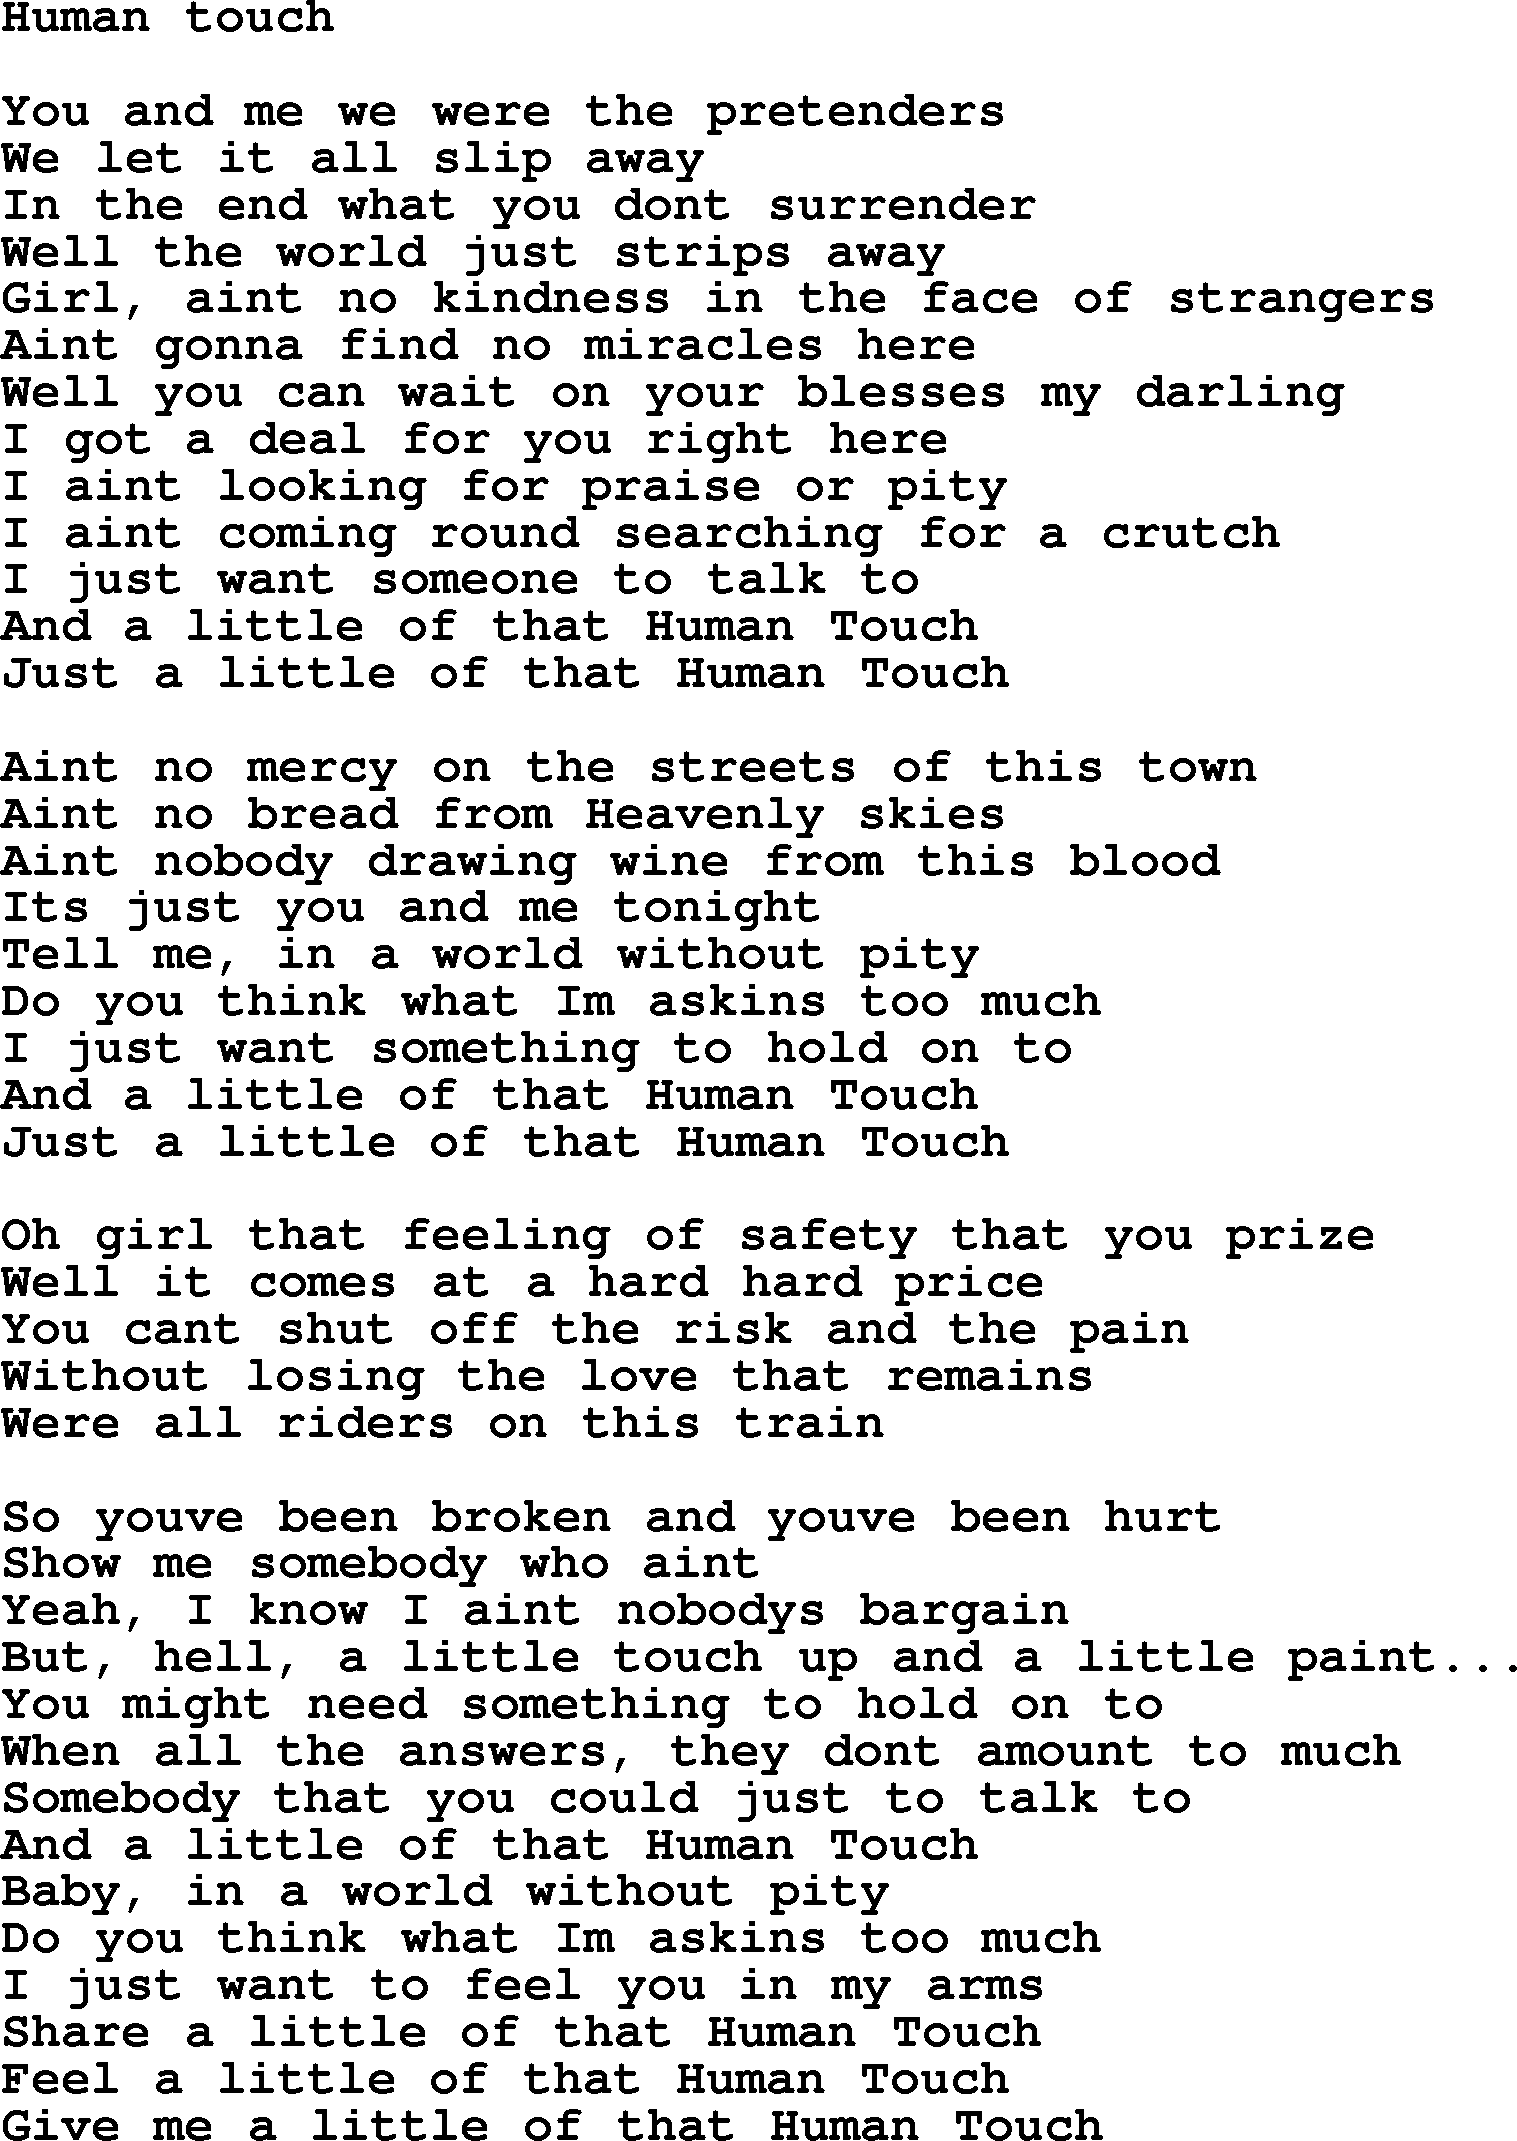 Bruce Springsteen song: Human Touch lyrics